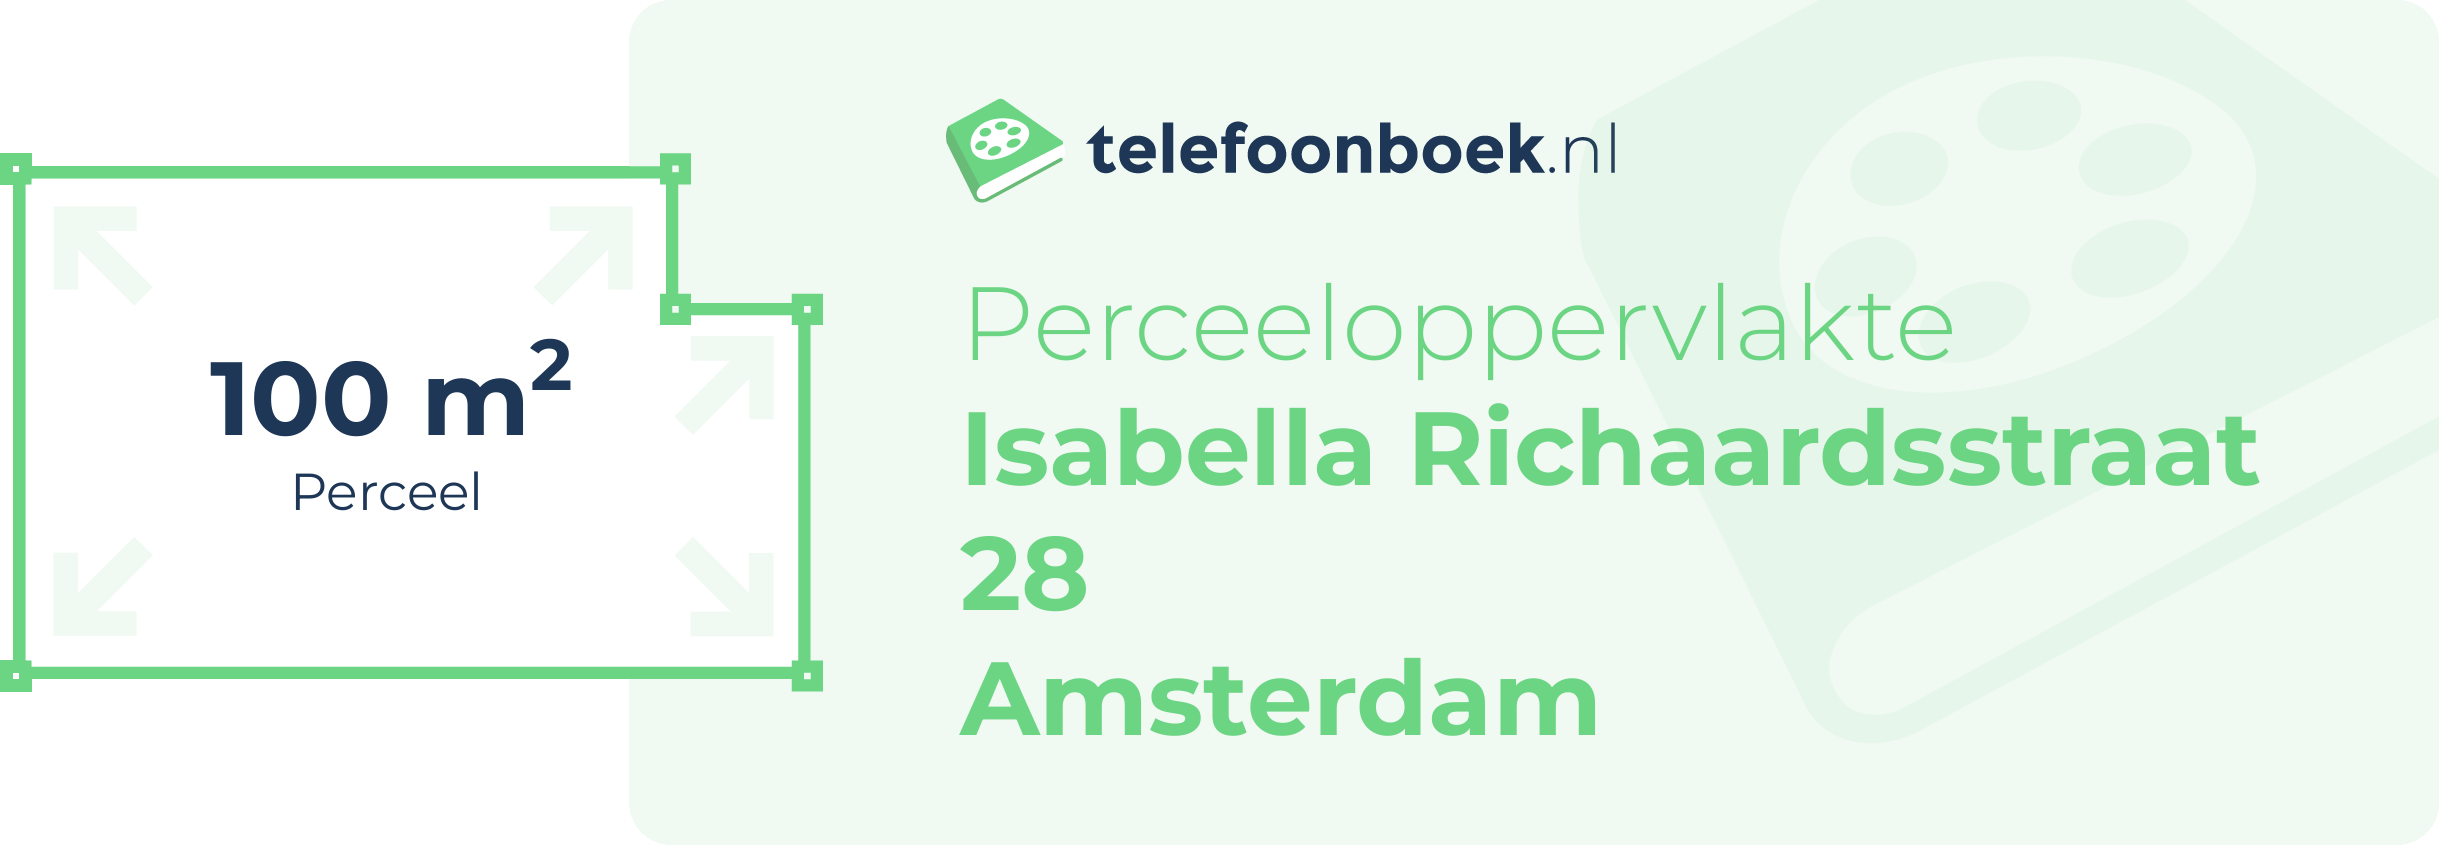 Perceeloppervlakte Isabella Richaardsstraat 28 Amsterdam